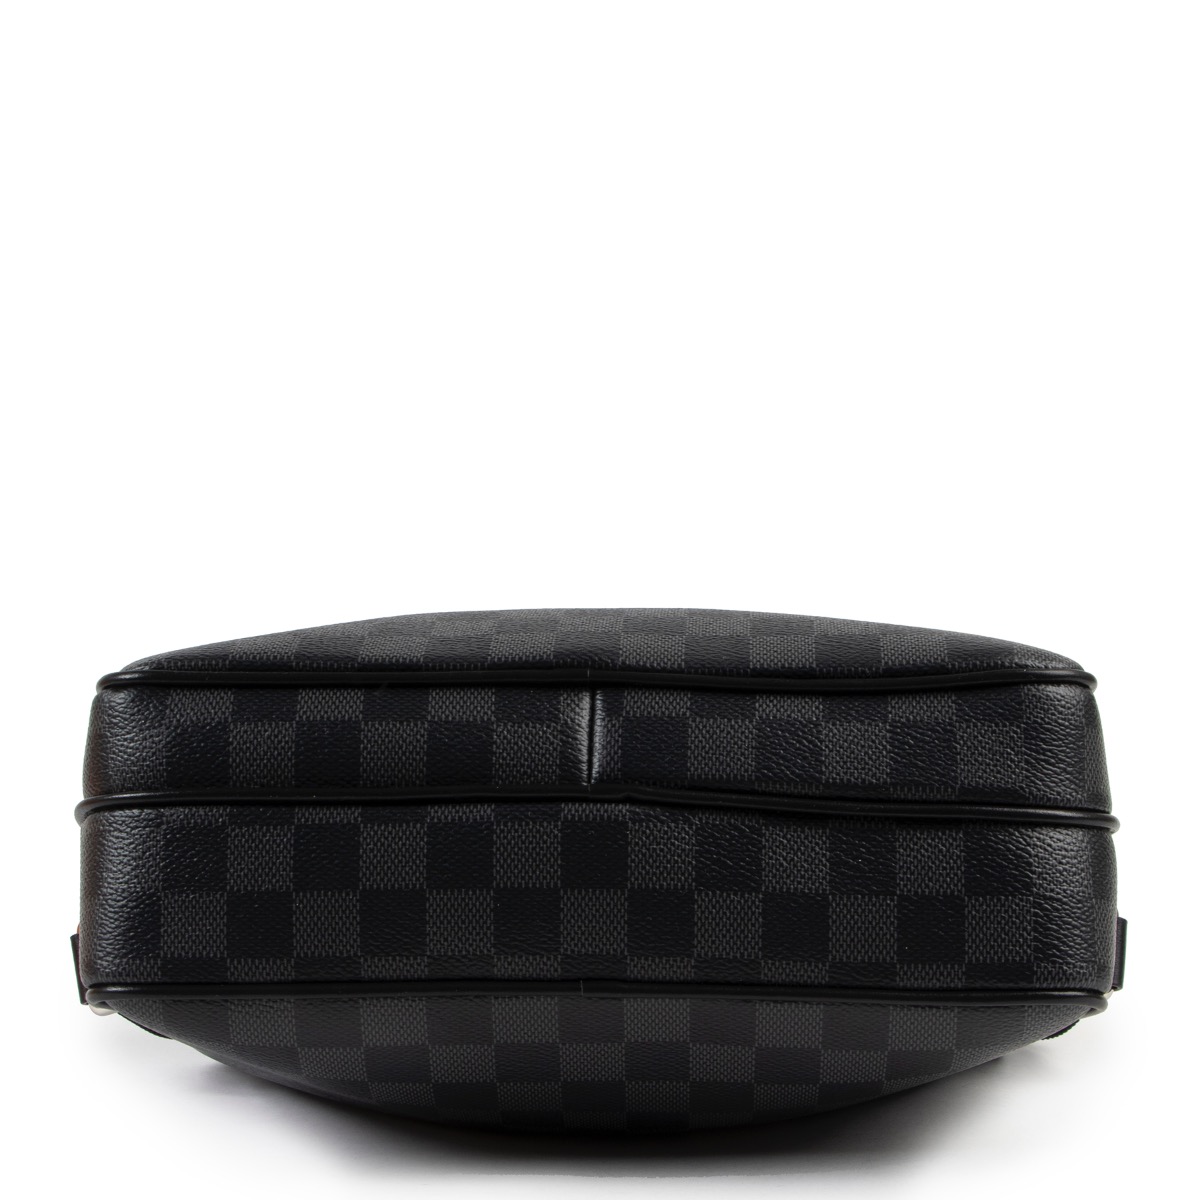 Louis Vuitton Trocadero NM Messenger Damier Graphite PM Black 9685081